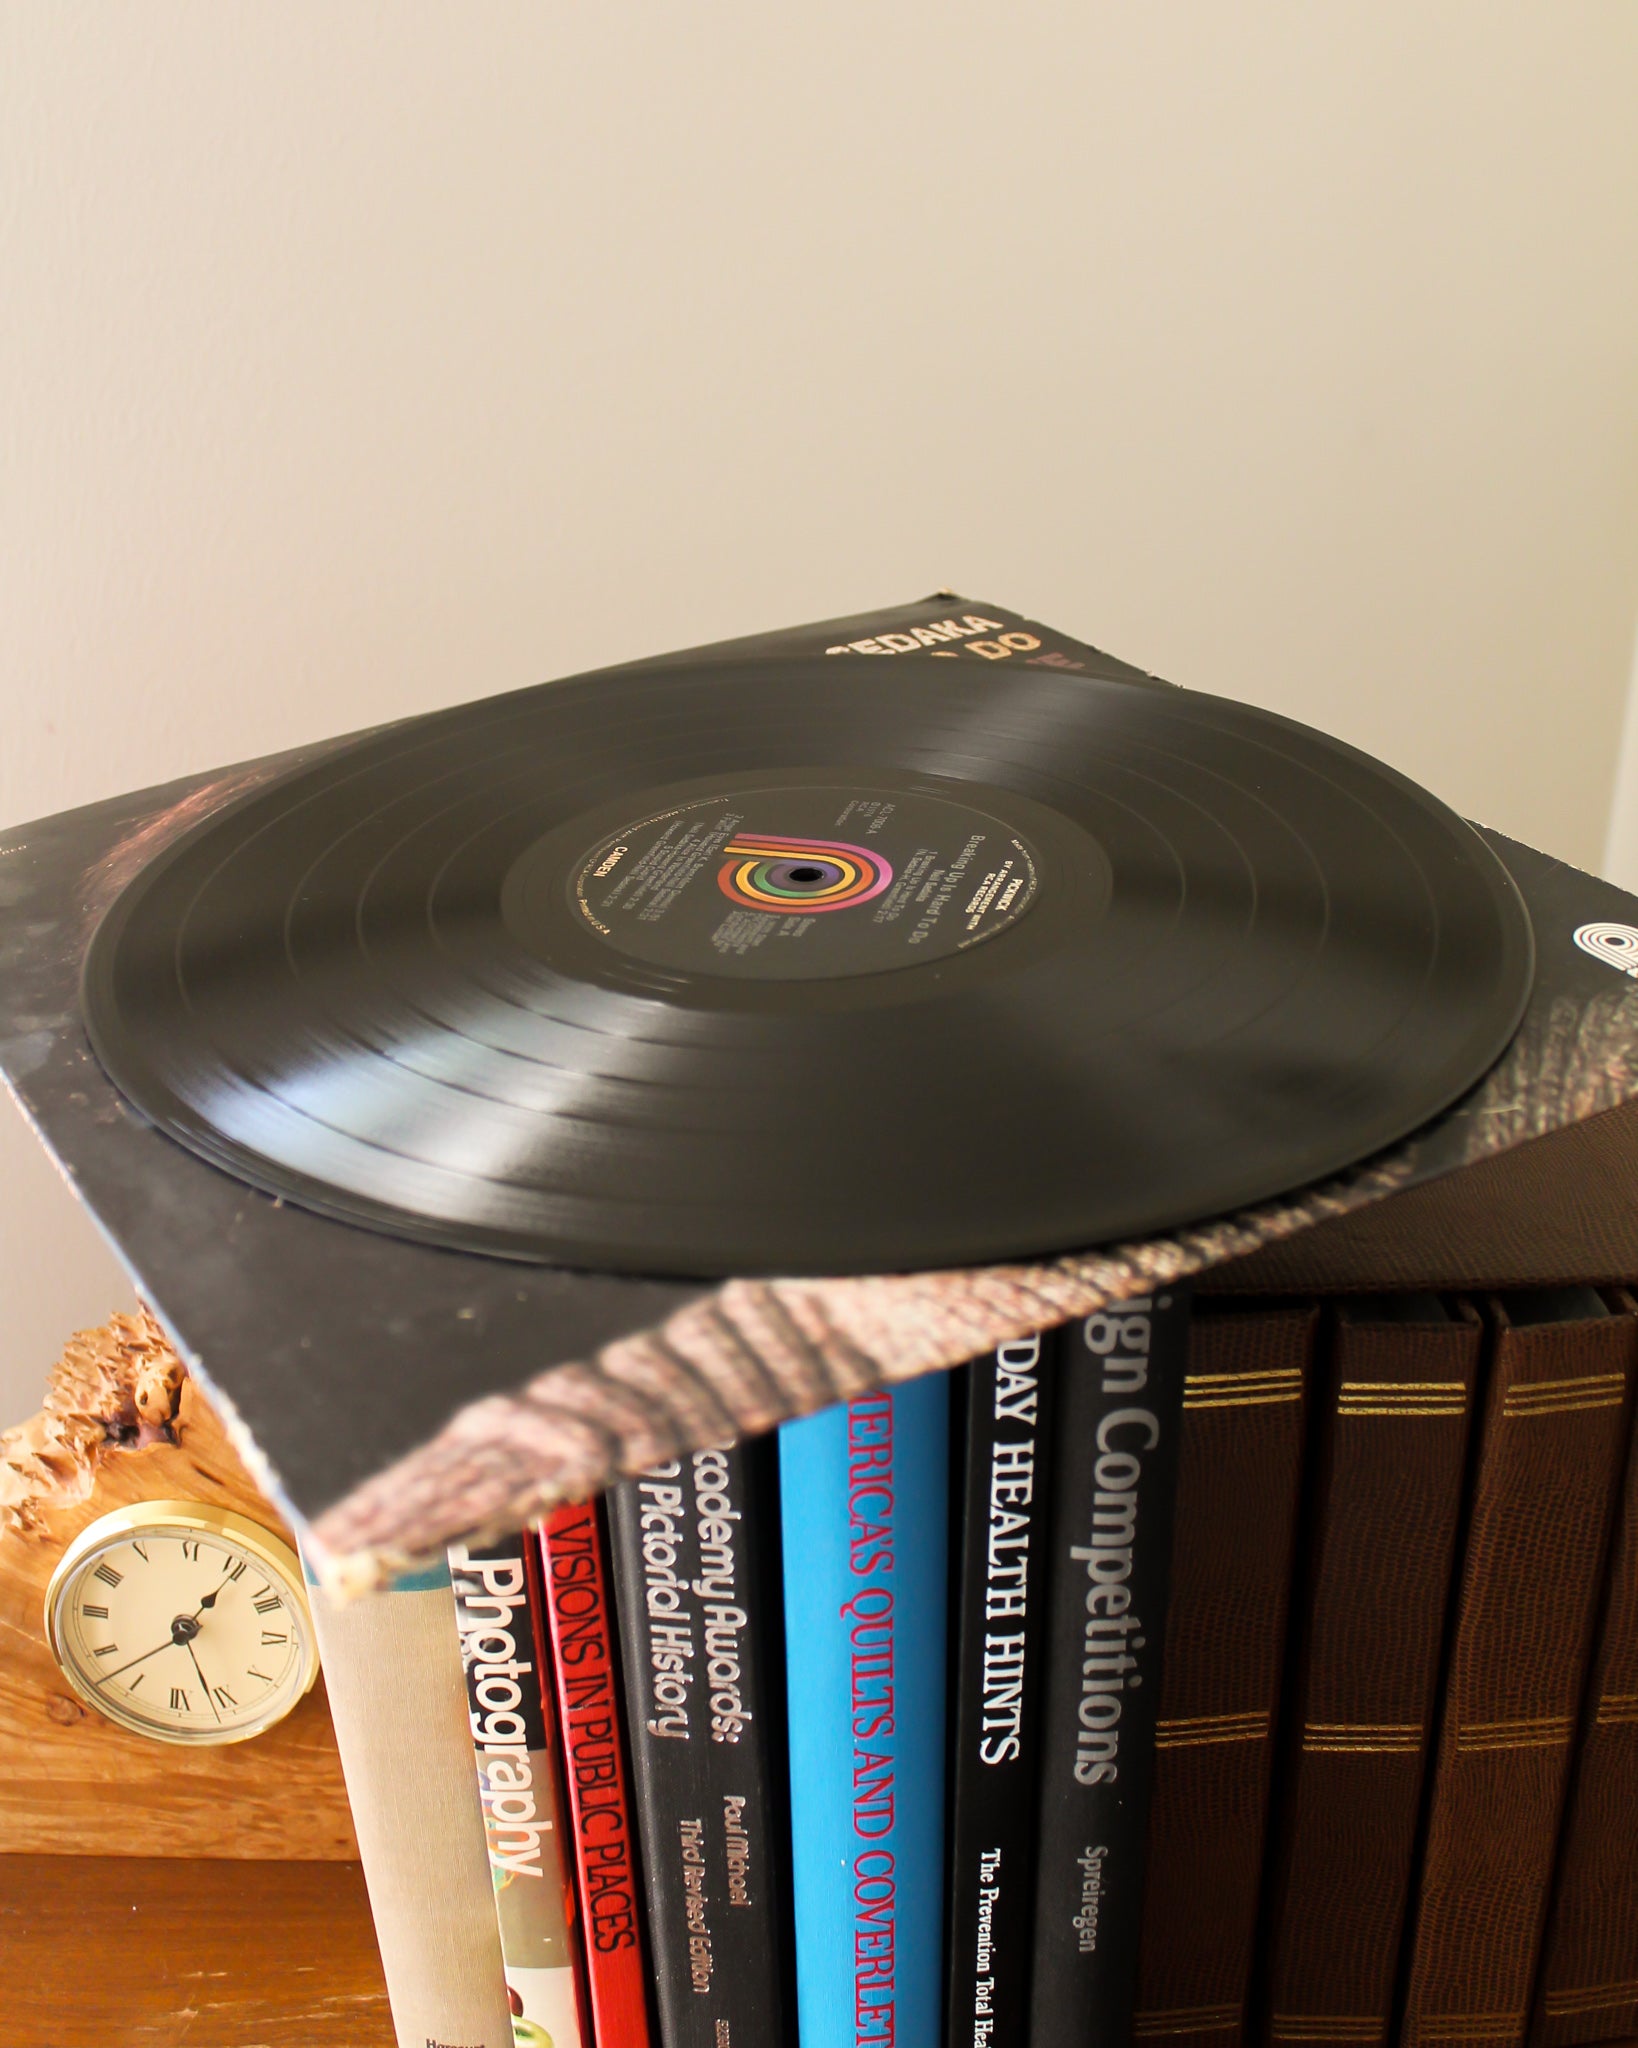 Neil Sedaka Vinyl